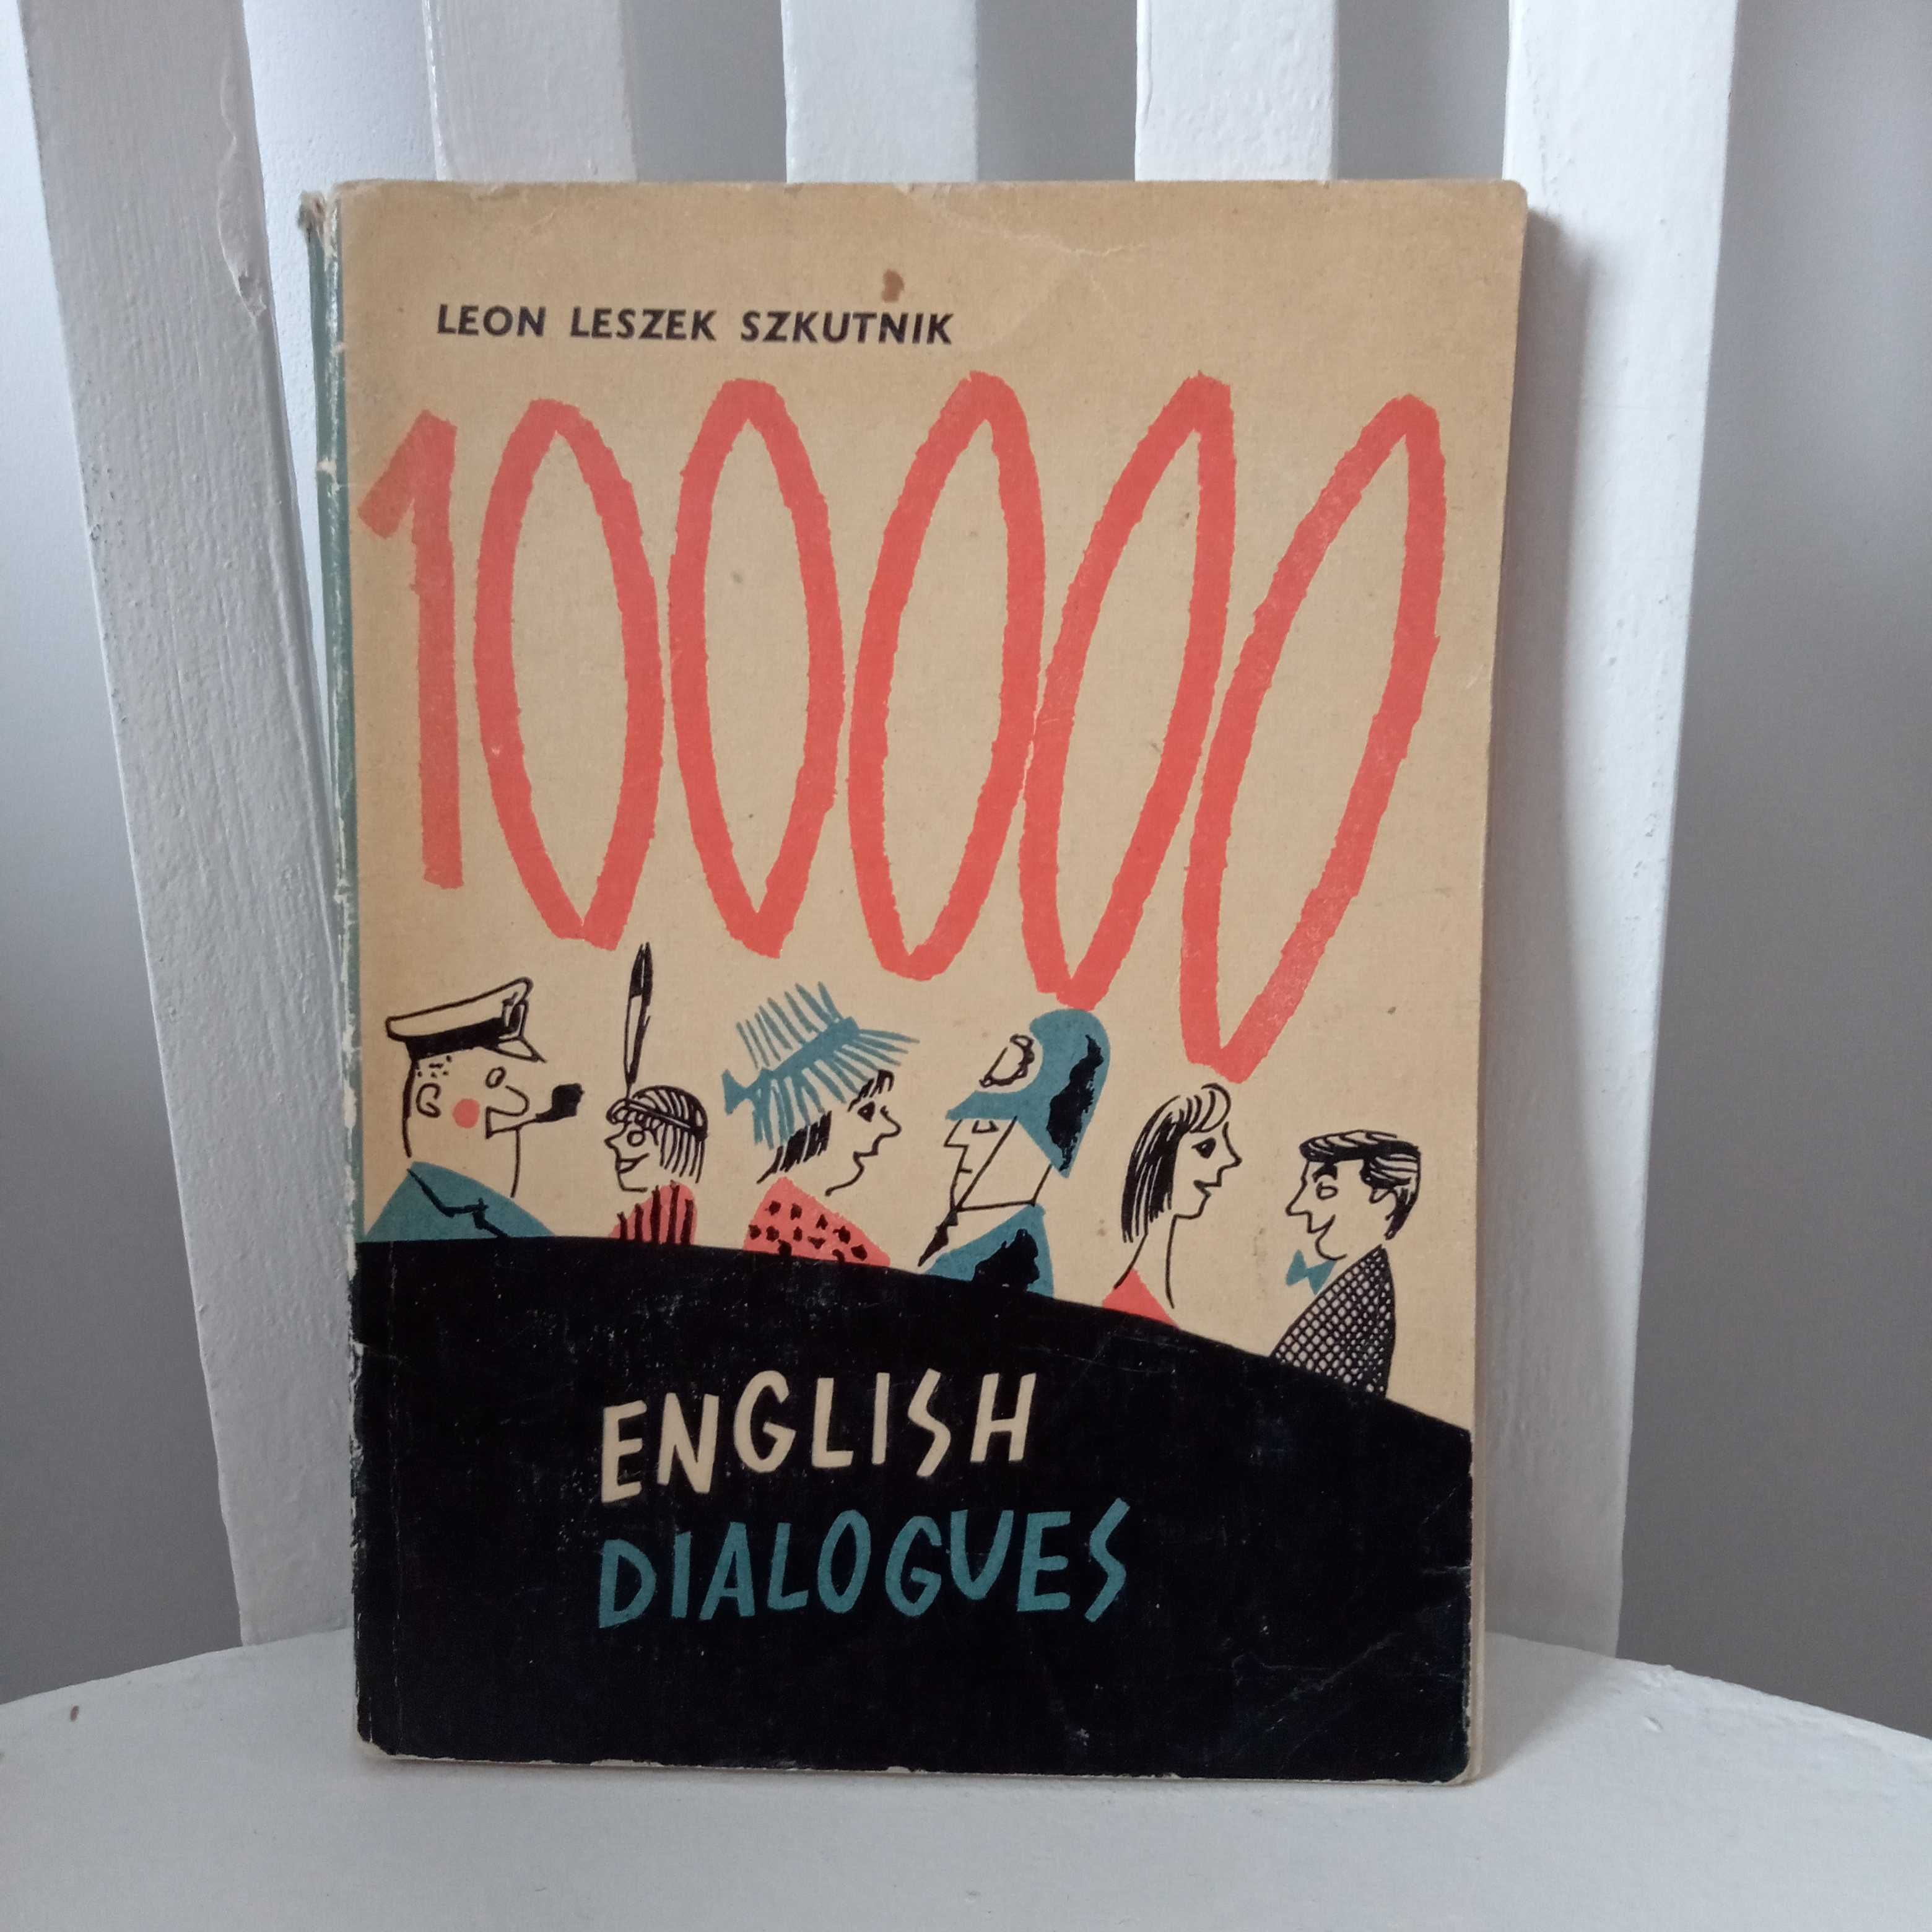 "100 000 English Dialogues" Leon Leszek Szkutnik